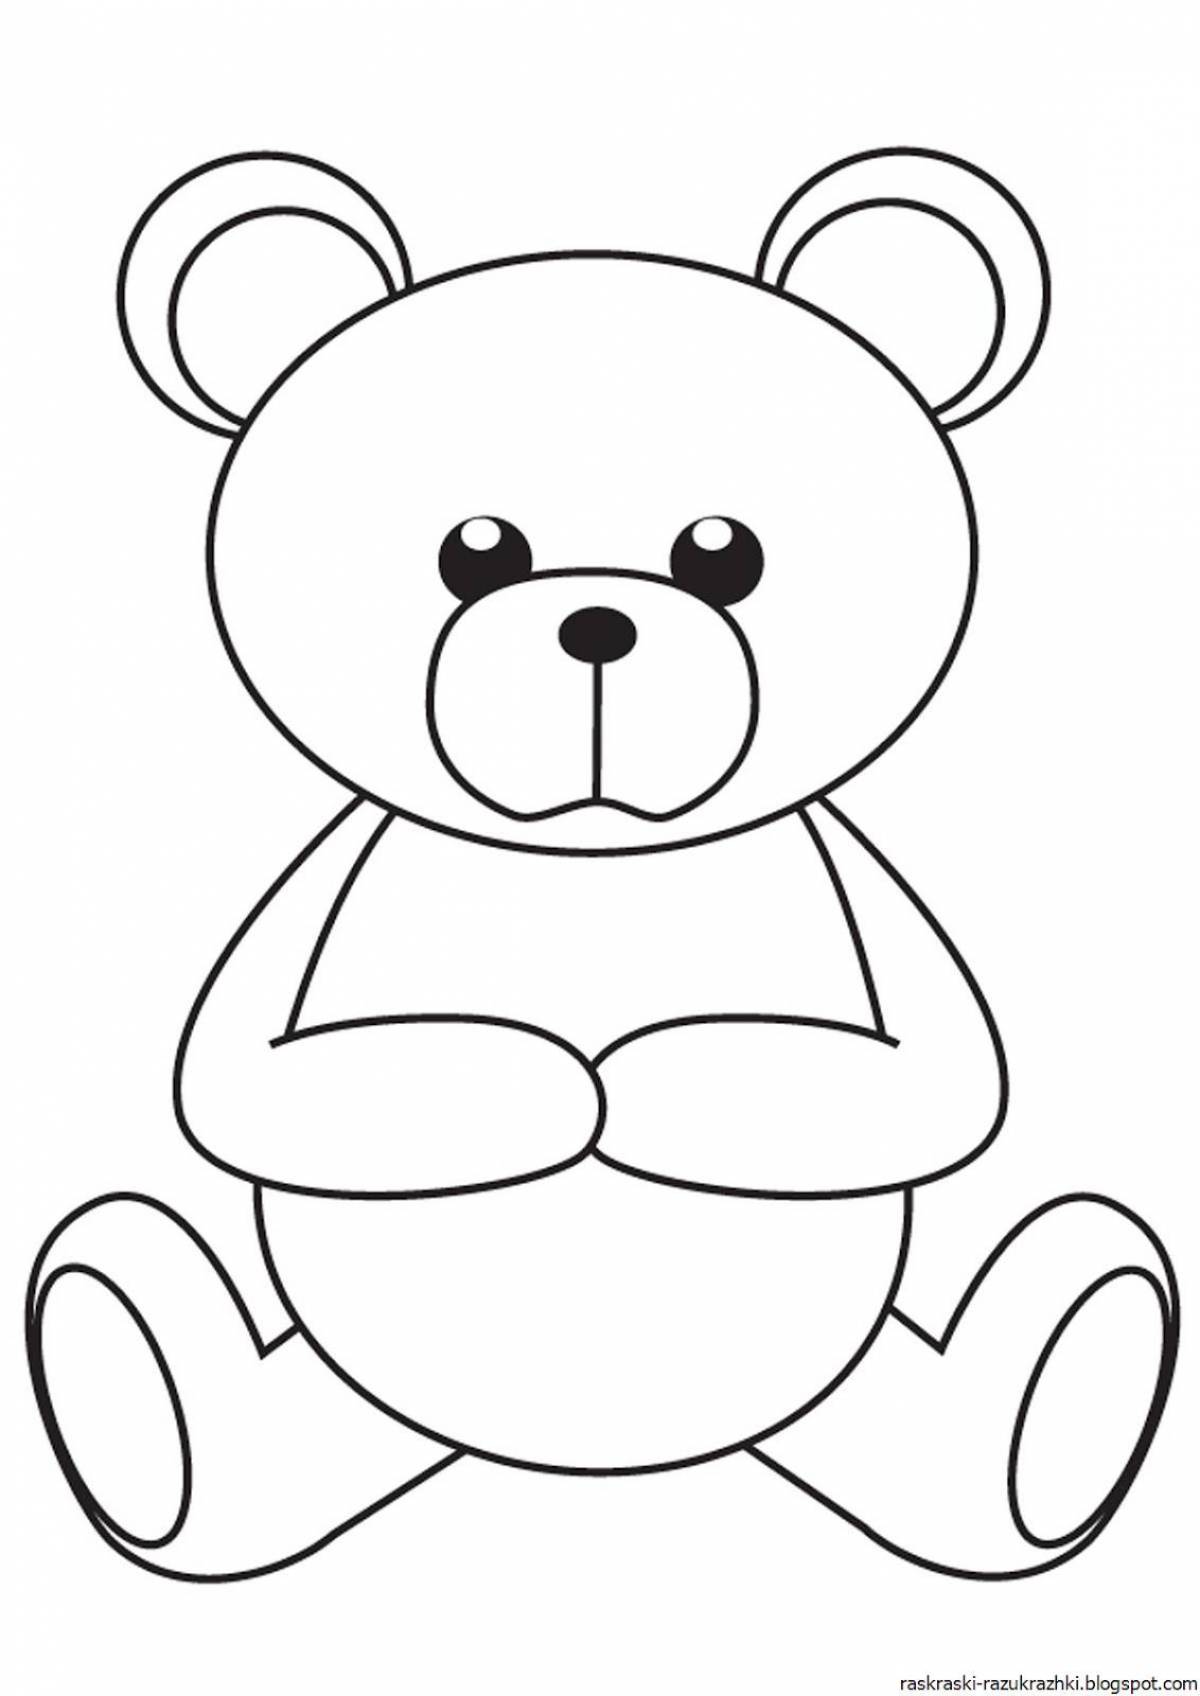 Huggable bear coloring book for kids